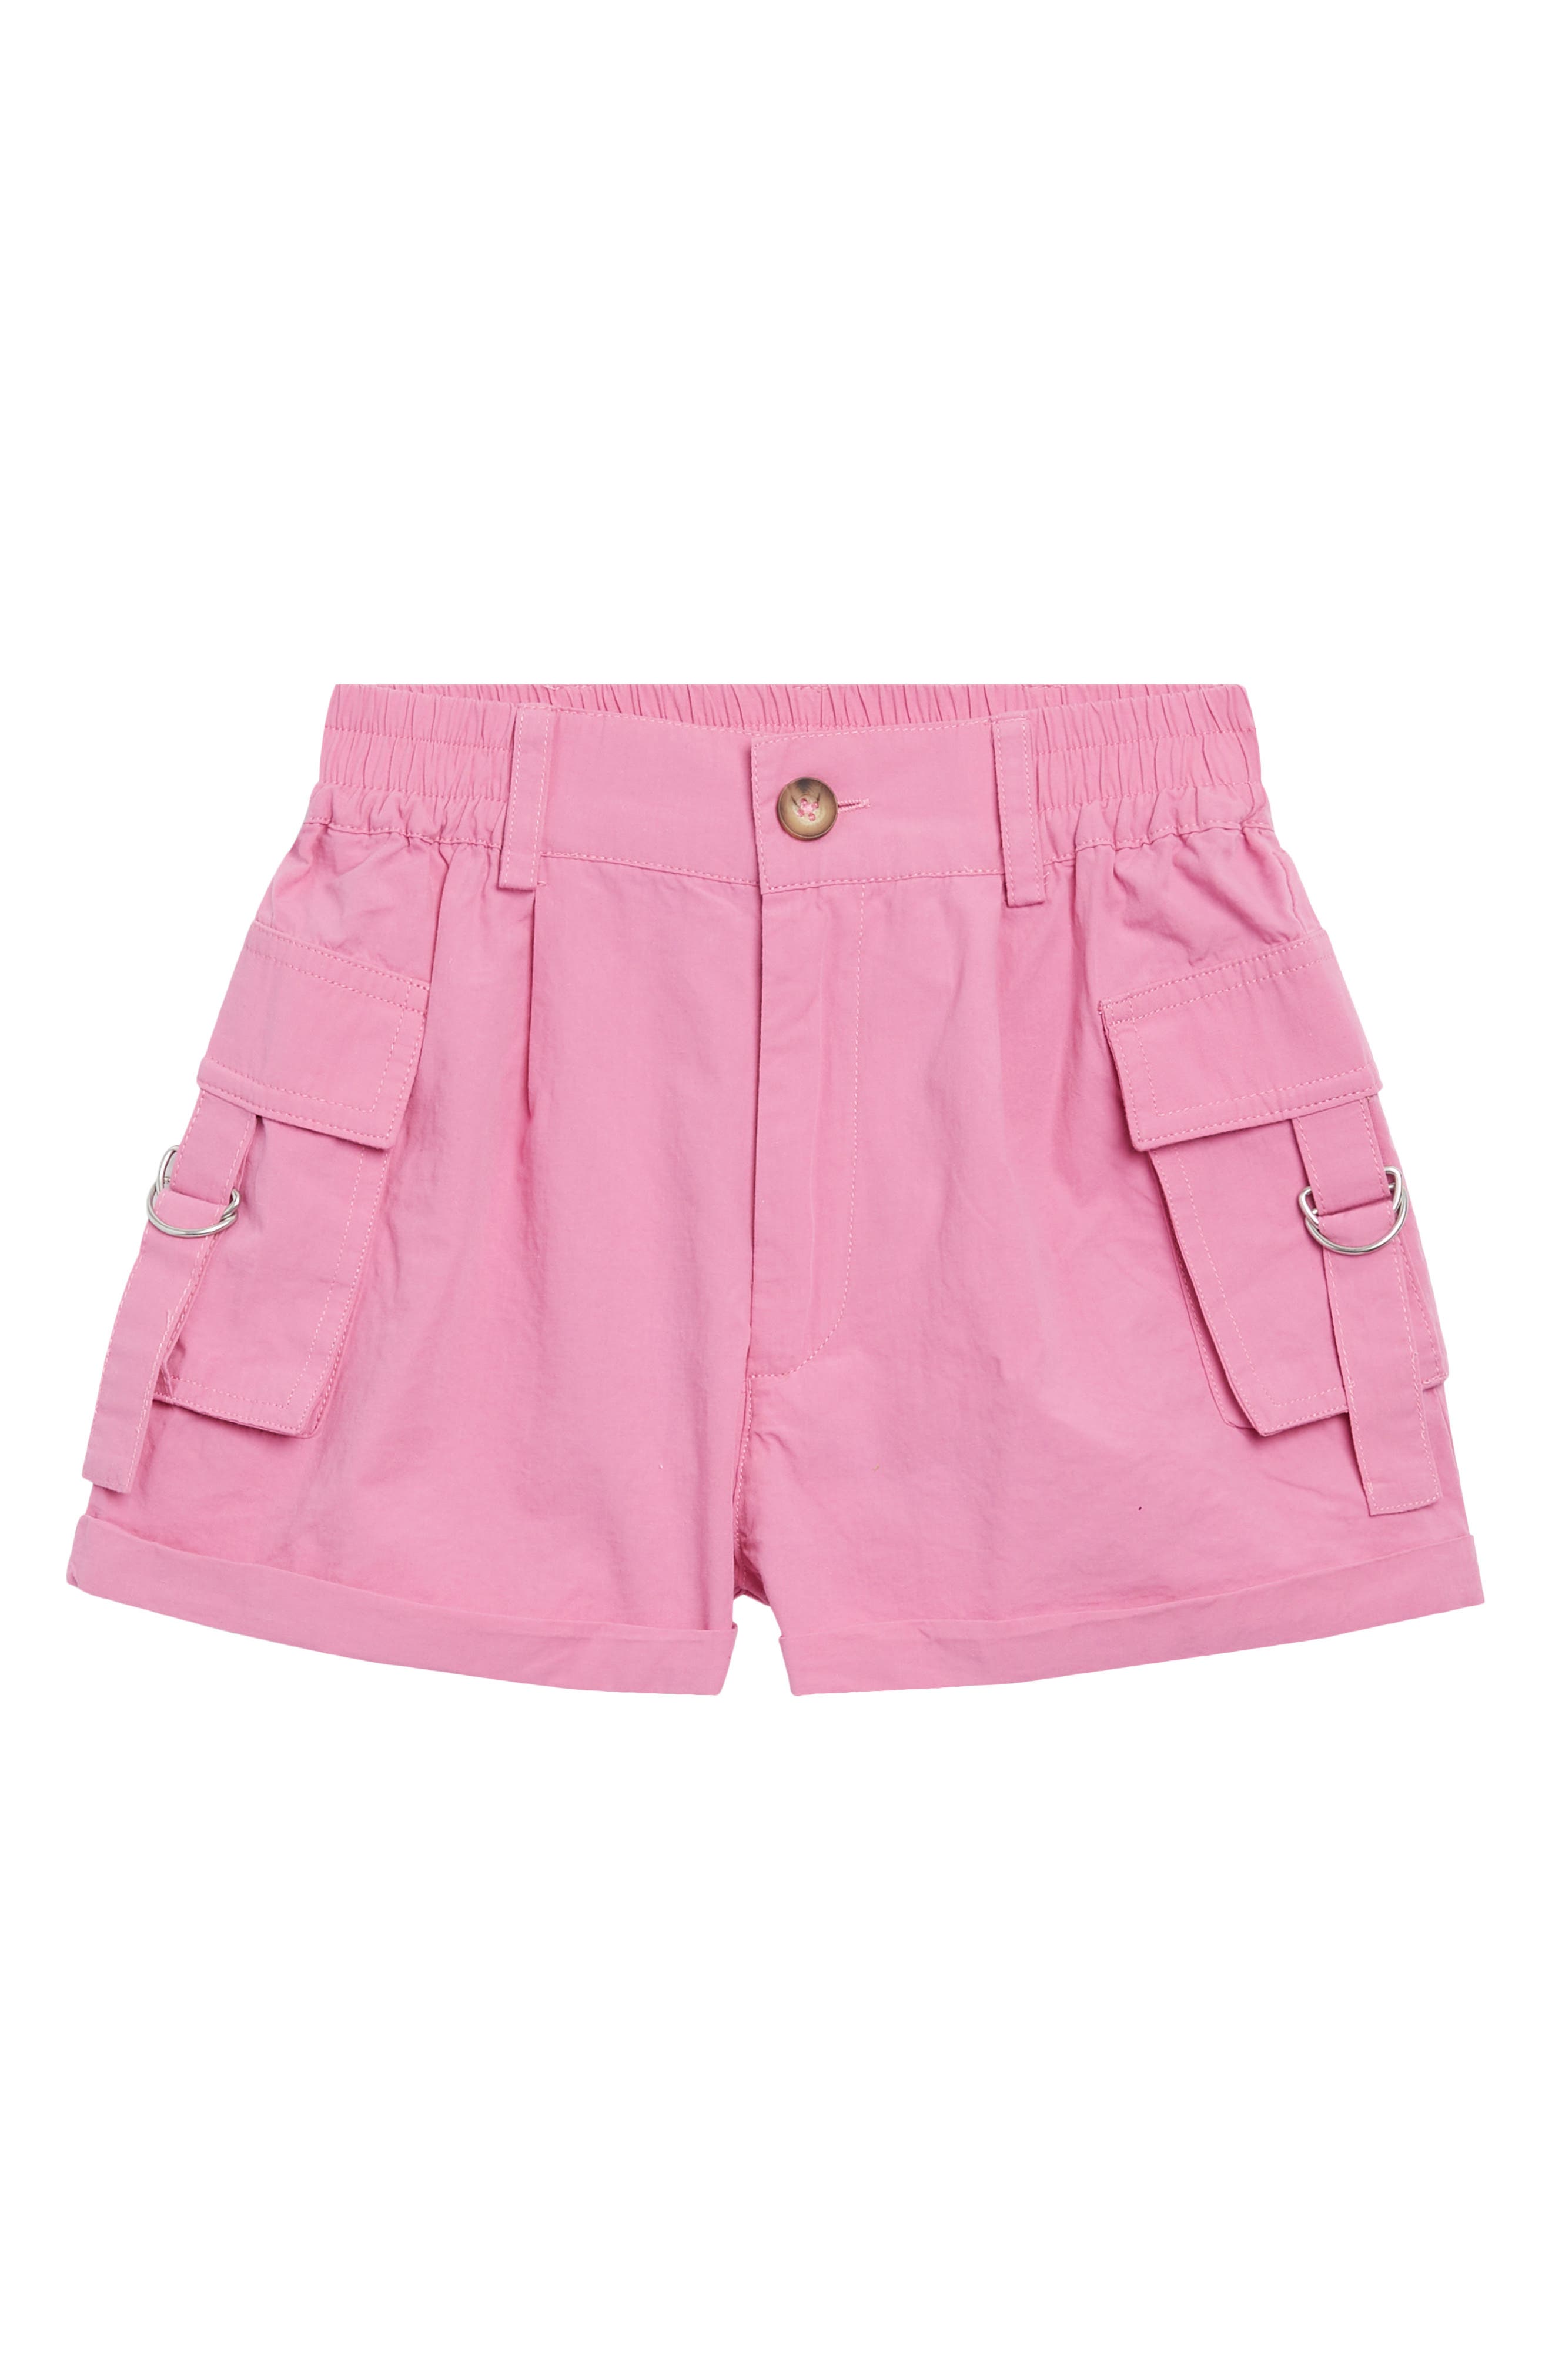 Michael Kors Kids drawstring waistband cotton shorts - Pink